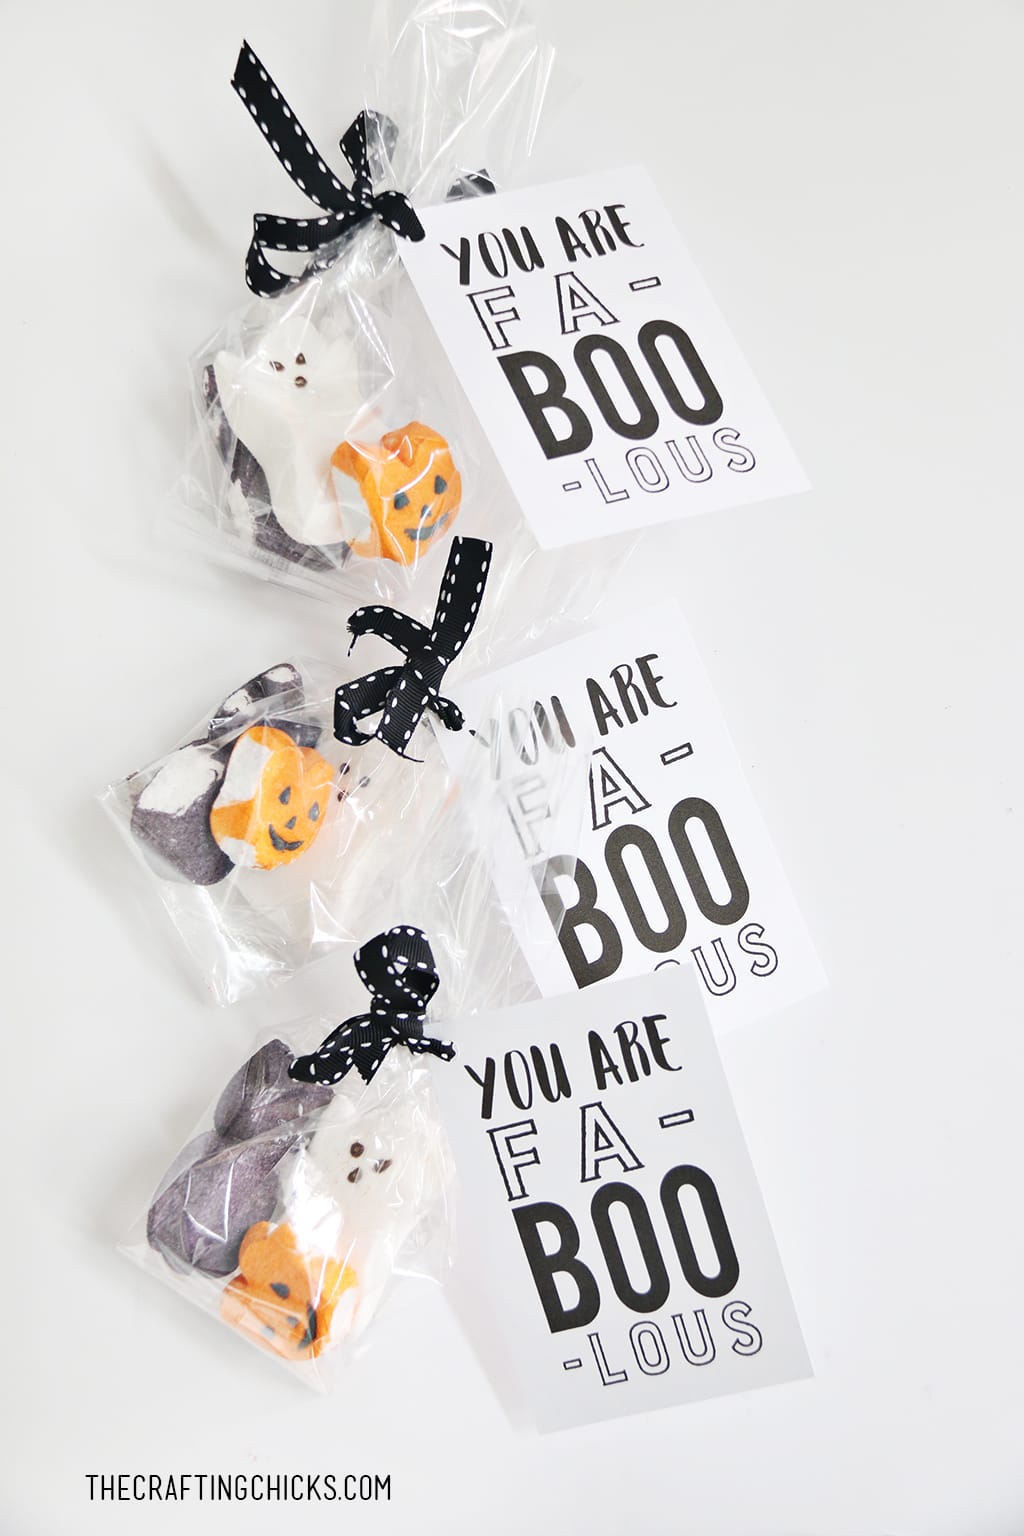 Fa "BOO" Lous Halloween Treat Tag tied to gift sacks with Peeps Candy Treats